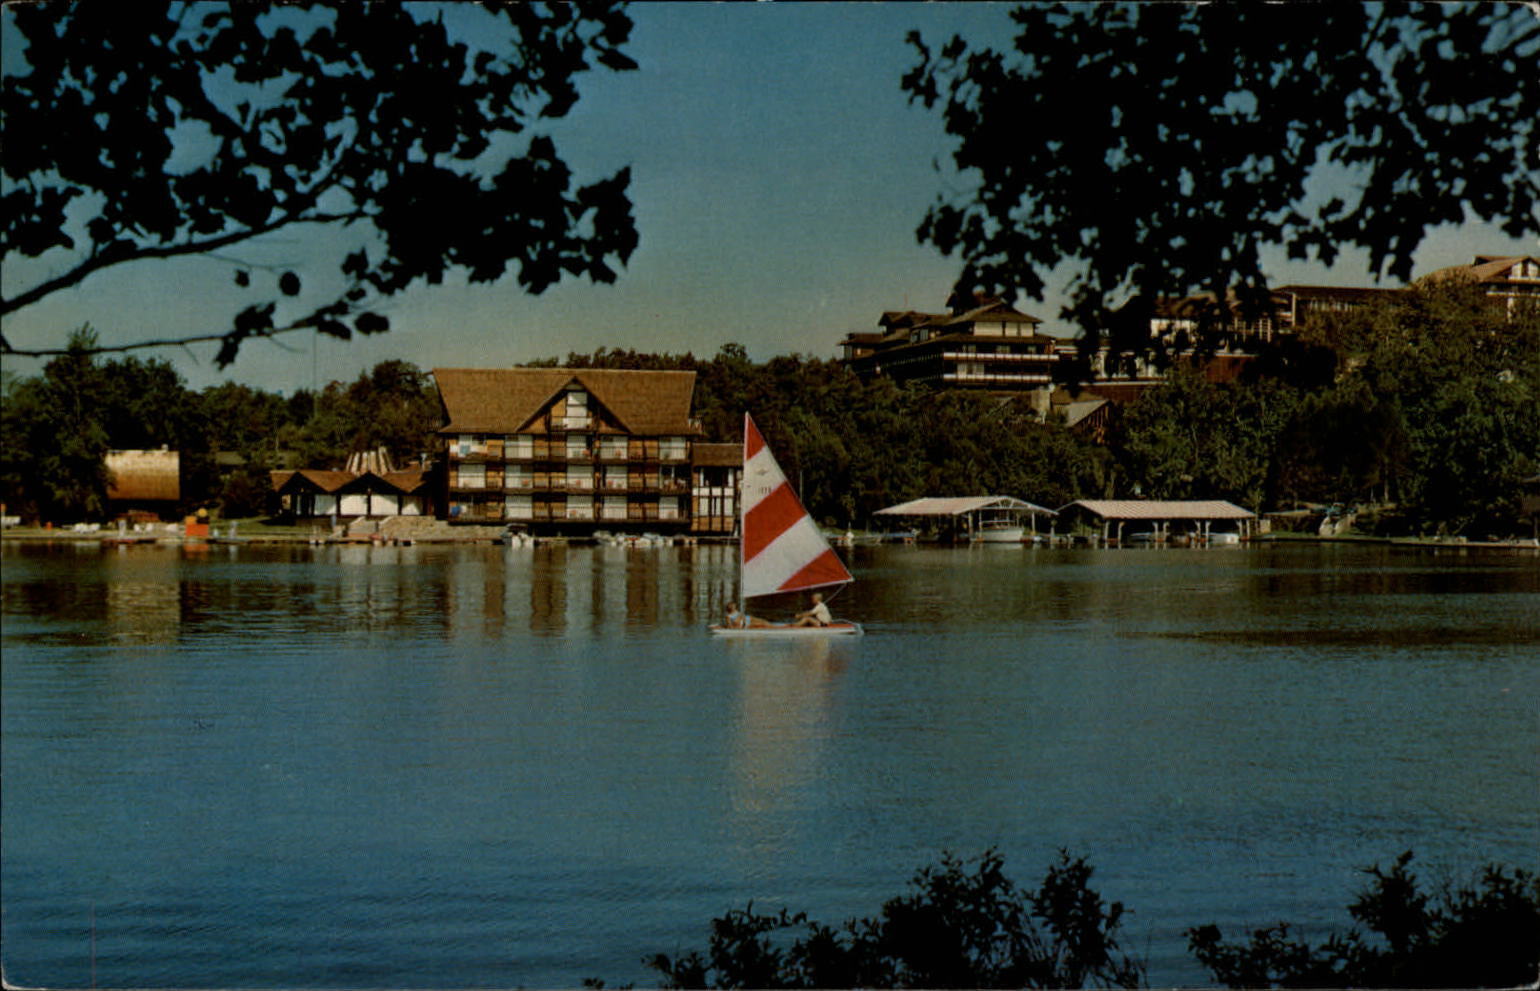 Tan-Tar-A Resort Osage Beach Missouri sailboat ~ 1960s vintage postcard